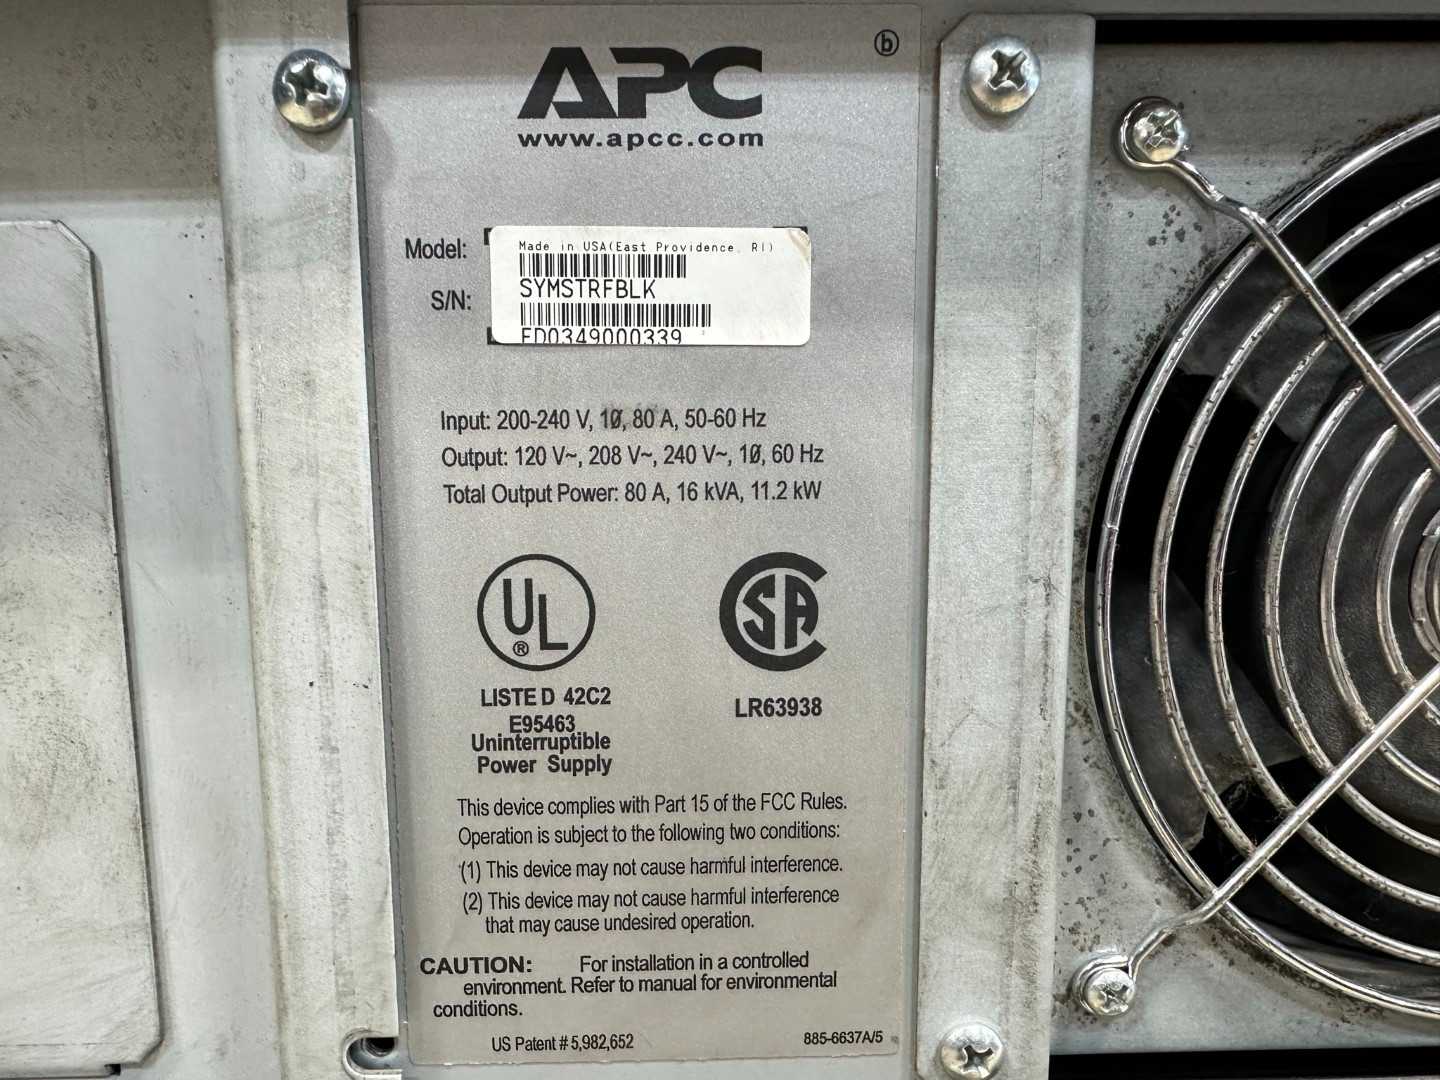 APC Symmetra Power Array SYMSTRBLK